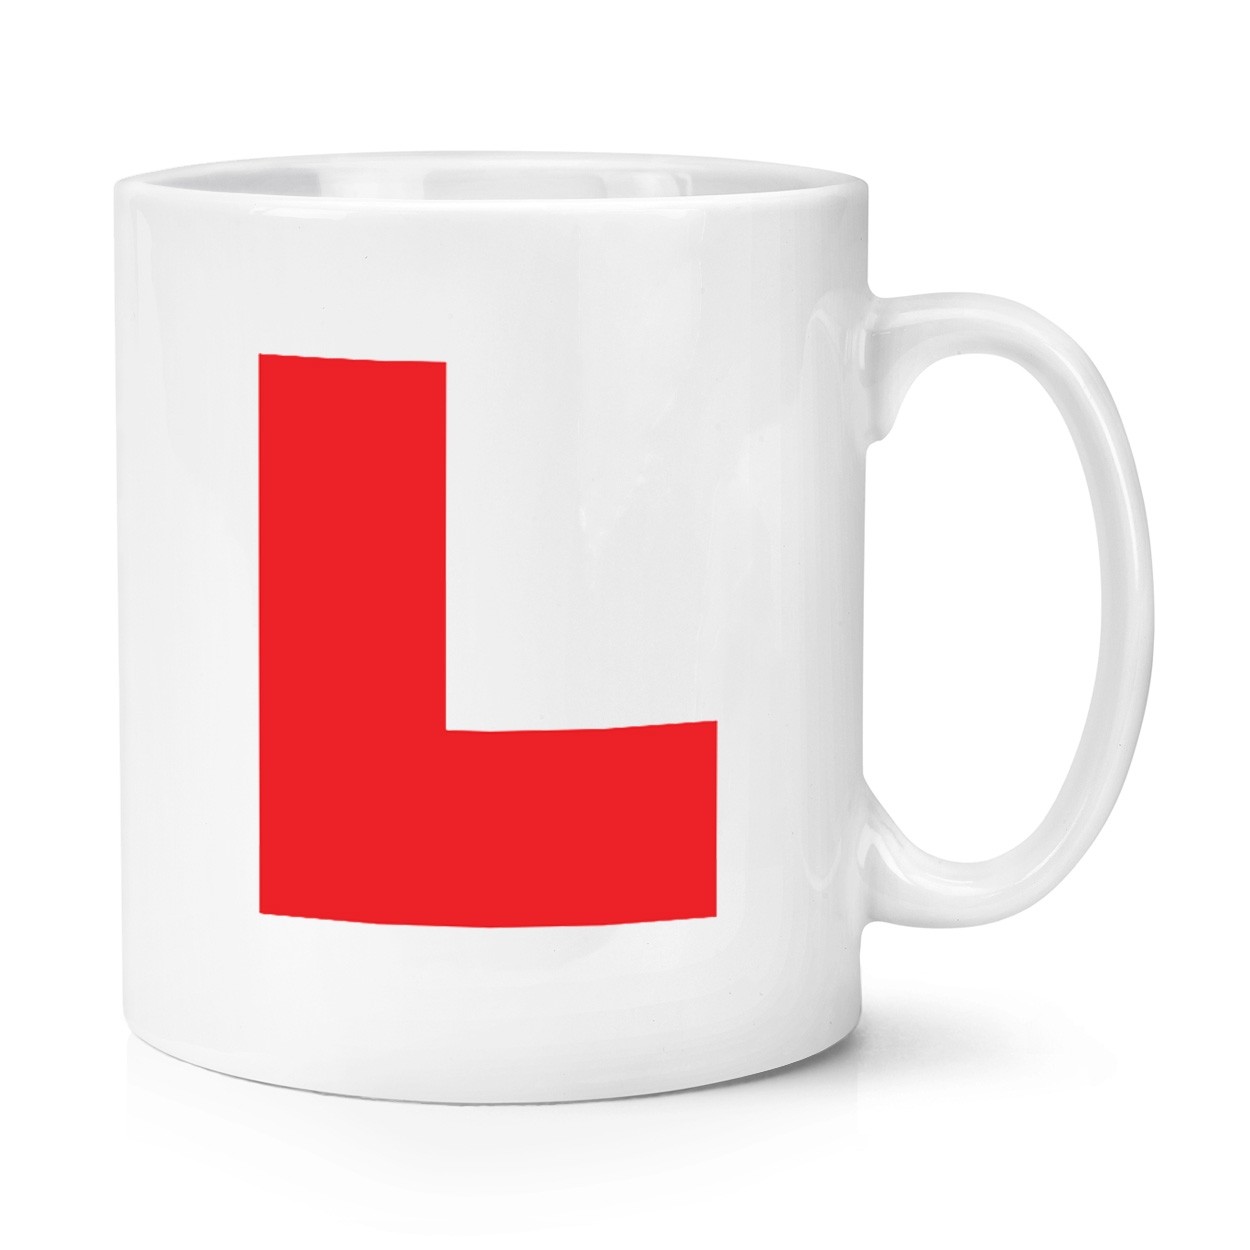 L Plate Red Learner Driver 10oz Mug Cup Funny Joke 